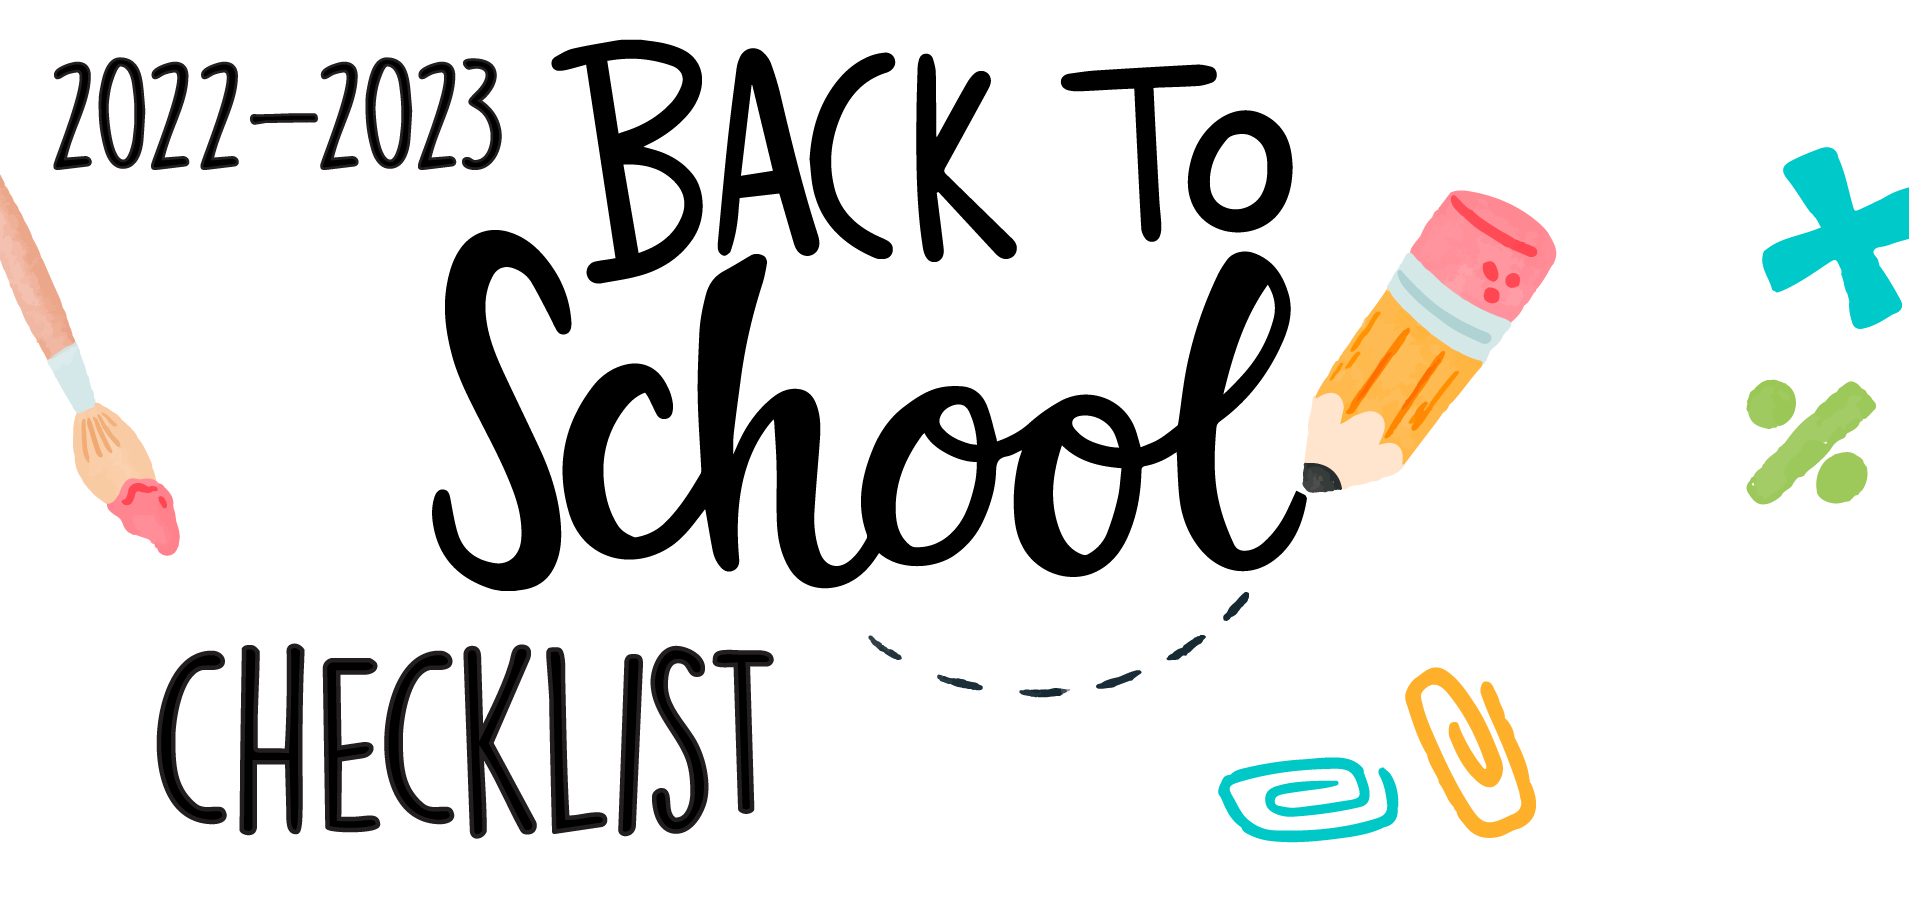 2022-2023 Back to School Checklist